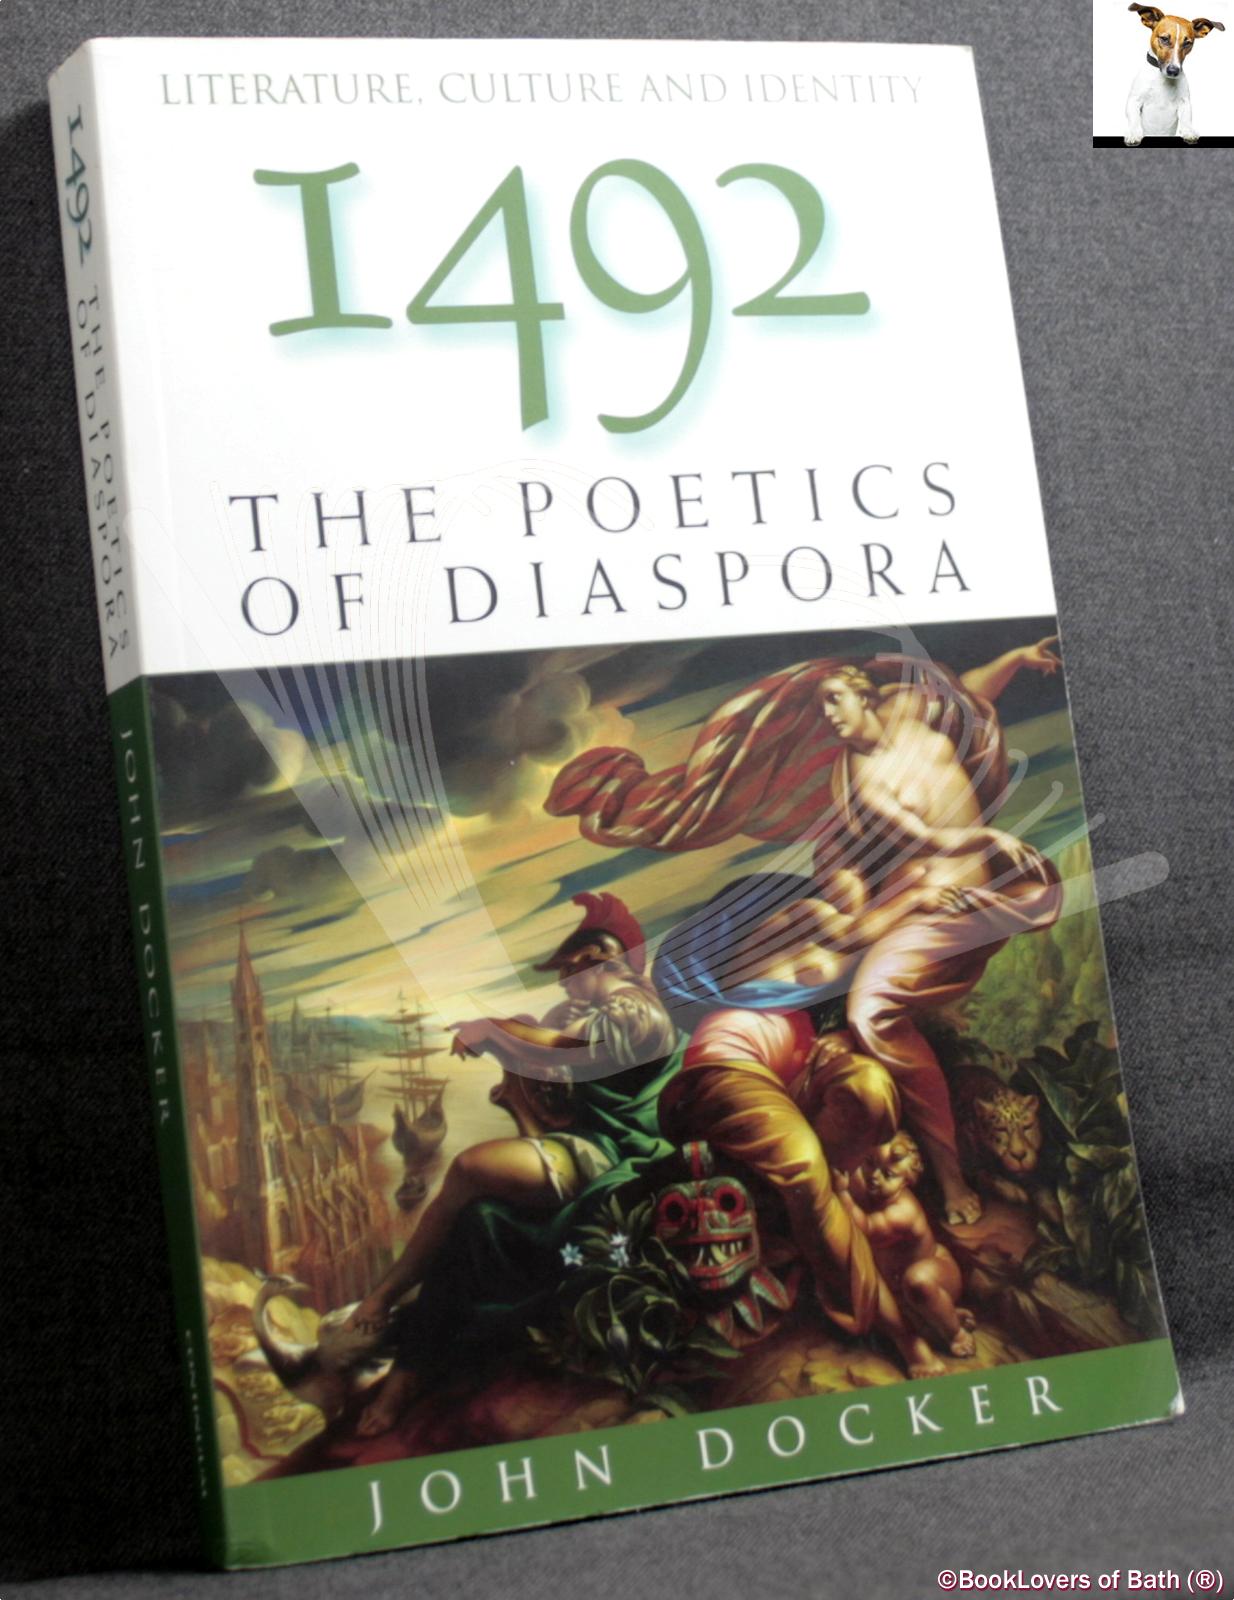 Dust　Docker:　Good.　John　(2001)　Wrapper.)　1492:　Very　(No　Diaspora　The　Paperback　Poetics　by　of　BookLovers　of　Bath